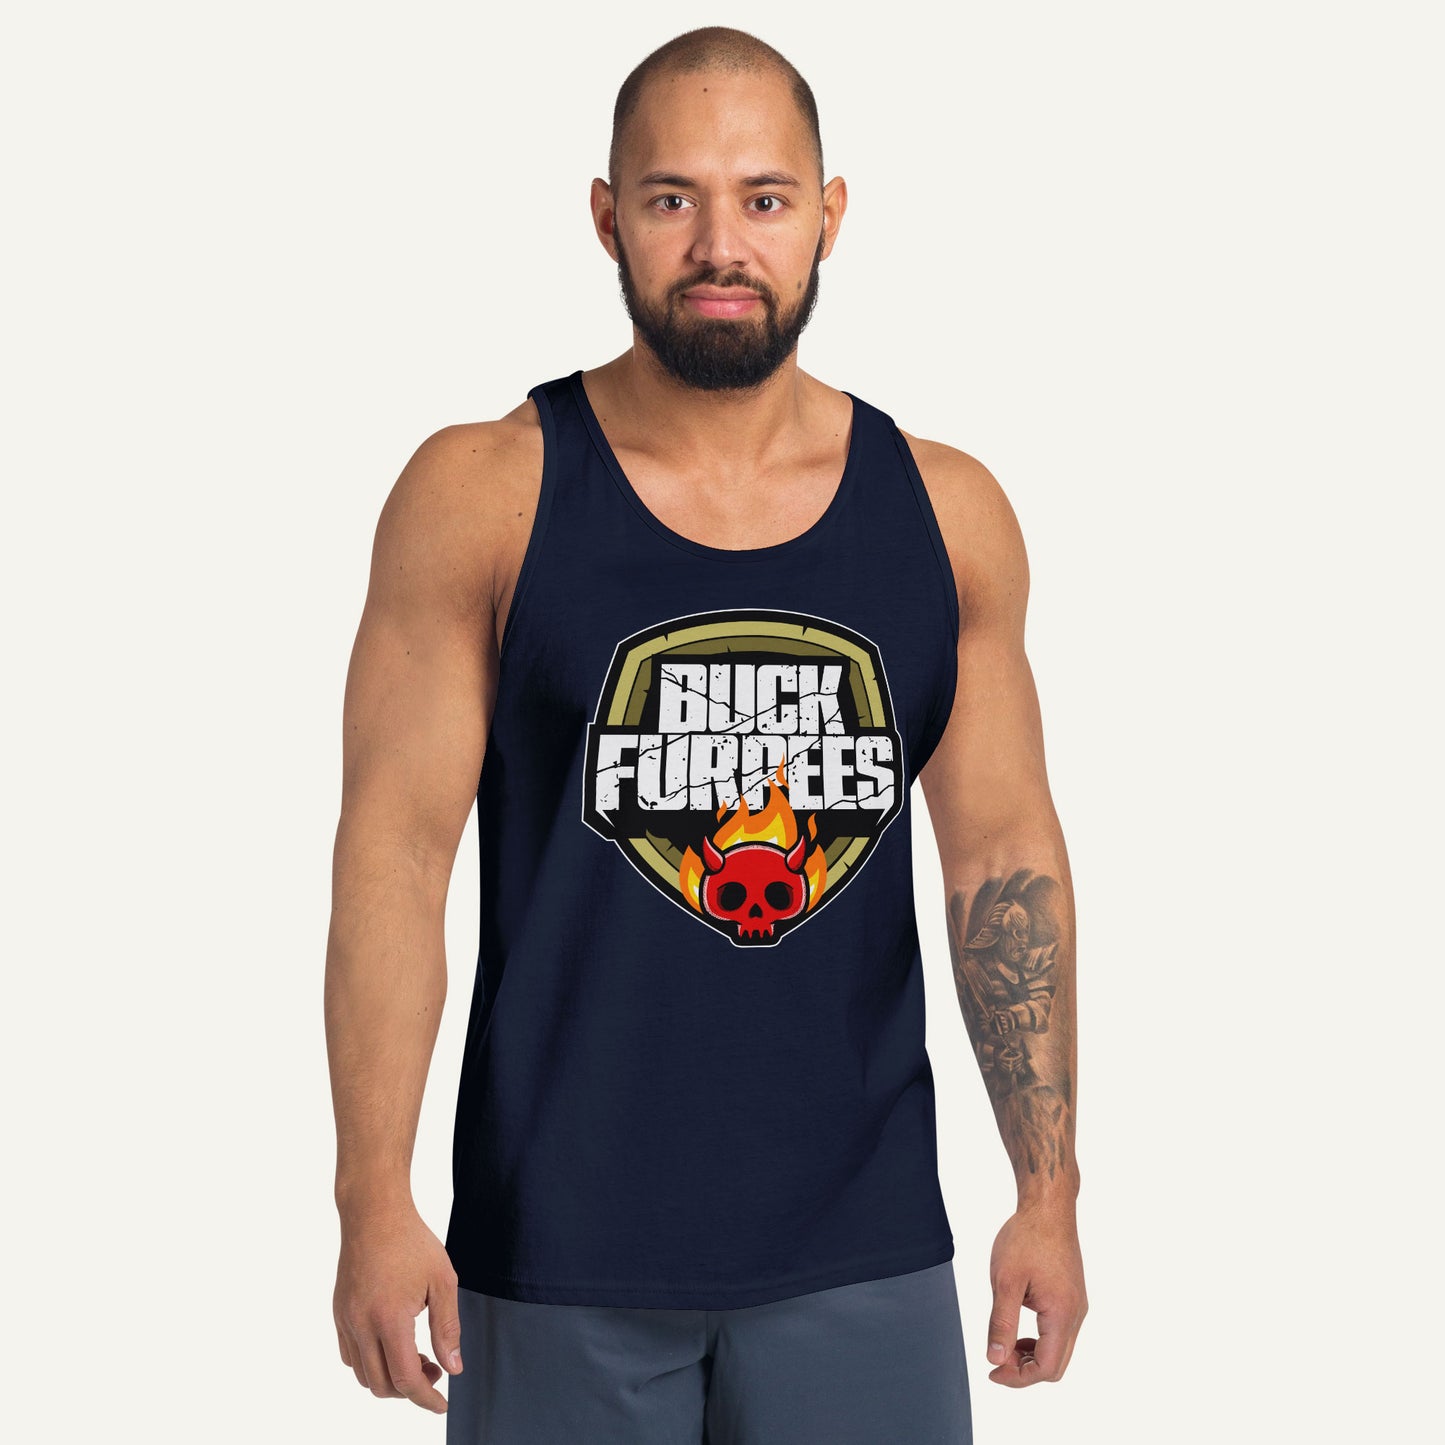 Buck Furpees Men’s Tank Top